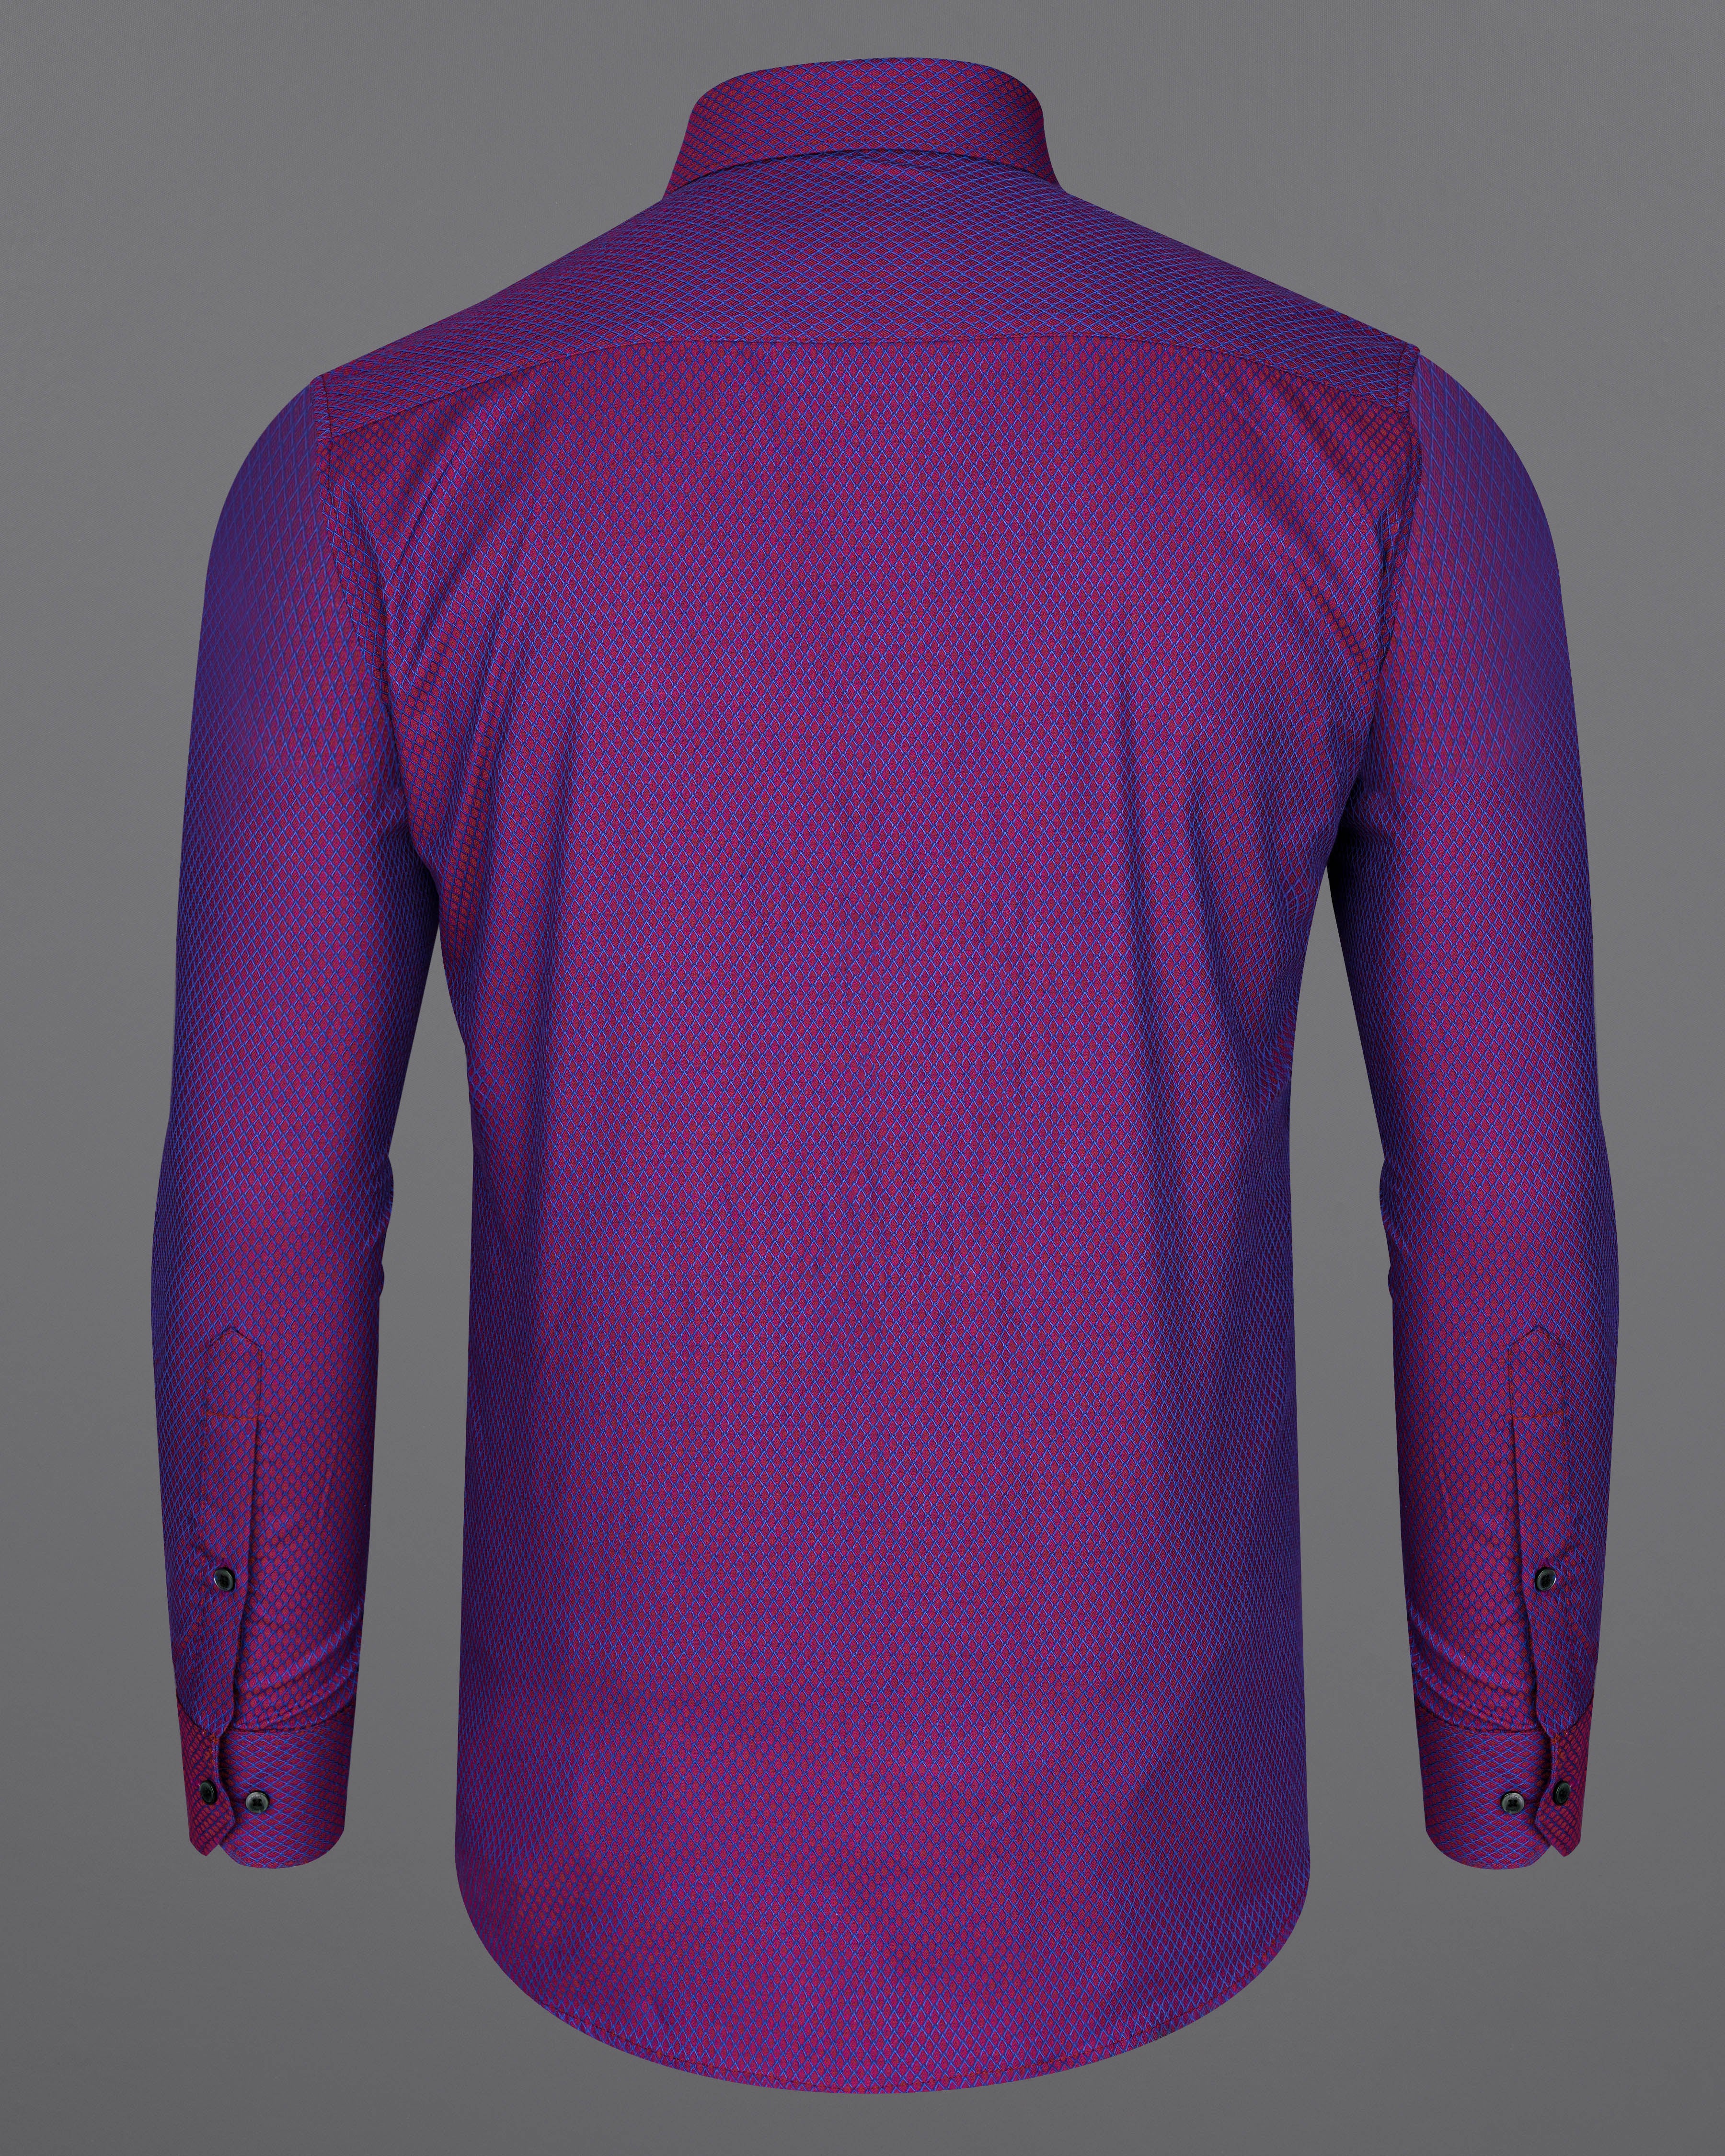 Seance Purple Jacquard Textured Premium Giza Cotton Shirt  8601-BLK-P405-38,8601-BLK-P405-H-38,8601-BLK-P405-39,8601-BLK-P405-H-39,8601-BLK-P405-40,8601-BLK-P405-H-40,8601-BLK-P405-42,8601-BLK-P405-H-42,8601-BLK-P405-44,8601-BLK-P405-H-44,8601-BLK-P405-46,8601-BLK-P405-H-46,8601-BLK-P405-48,8601-BLK-P405-H-48,8601-BLK-P405-50,8601-BLK-P405-H-50,8601-BLK-P405-52,8601-BLK-P405-H-52